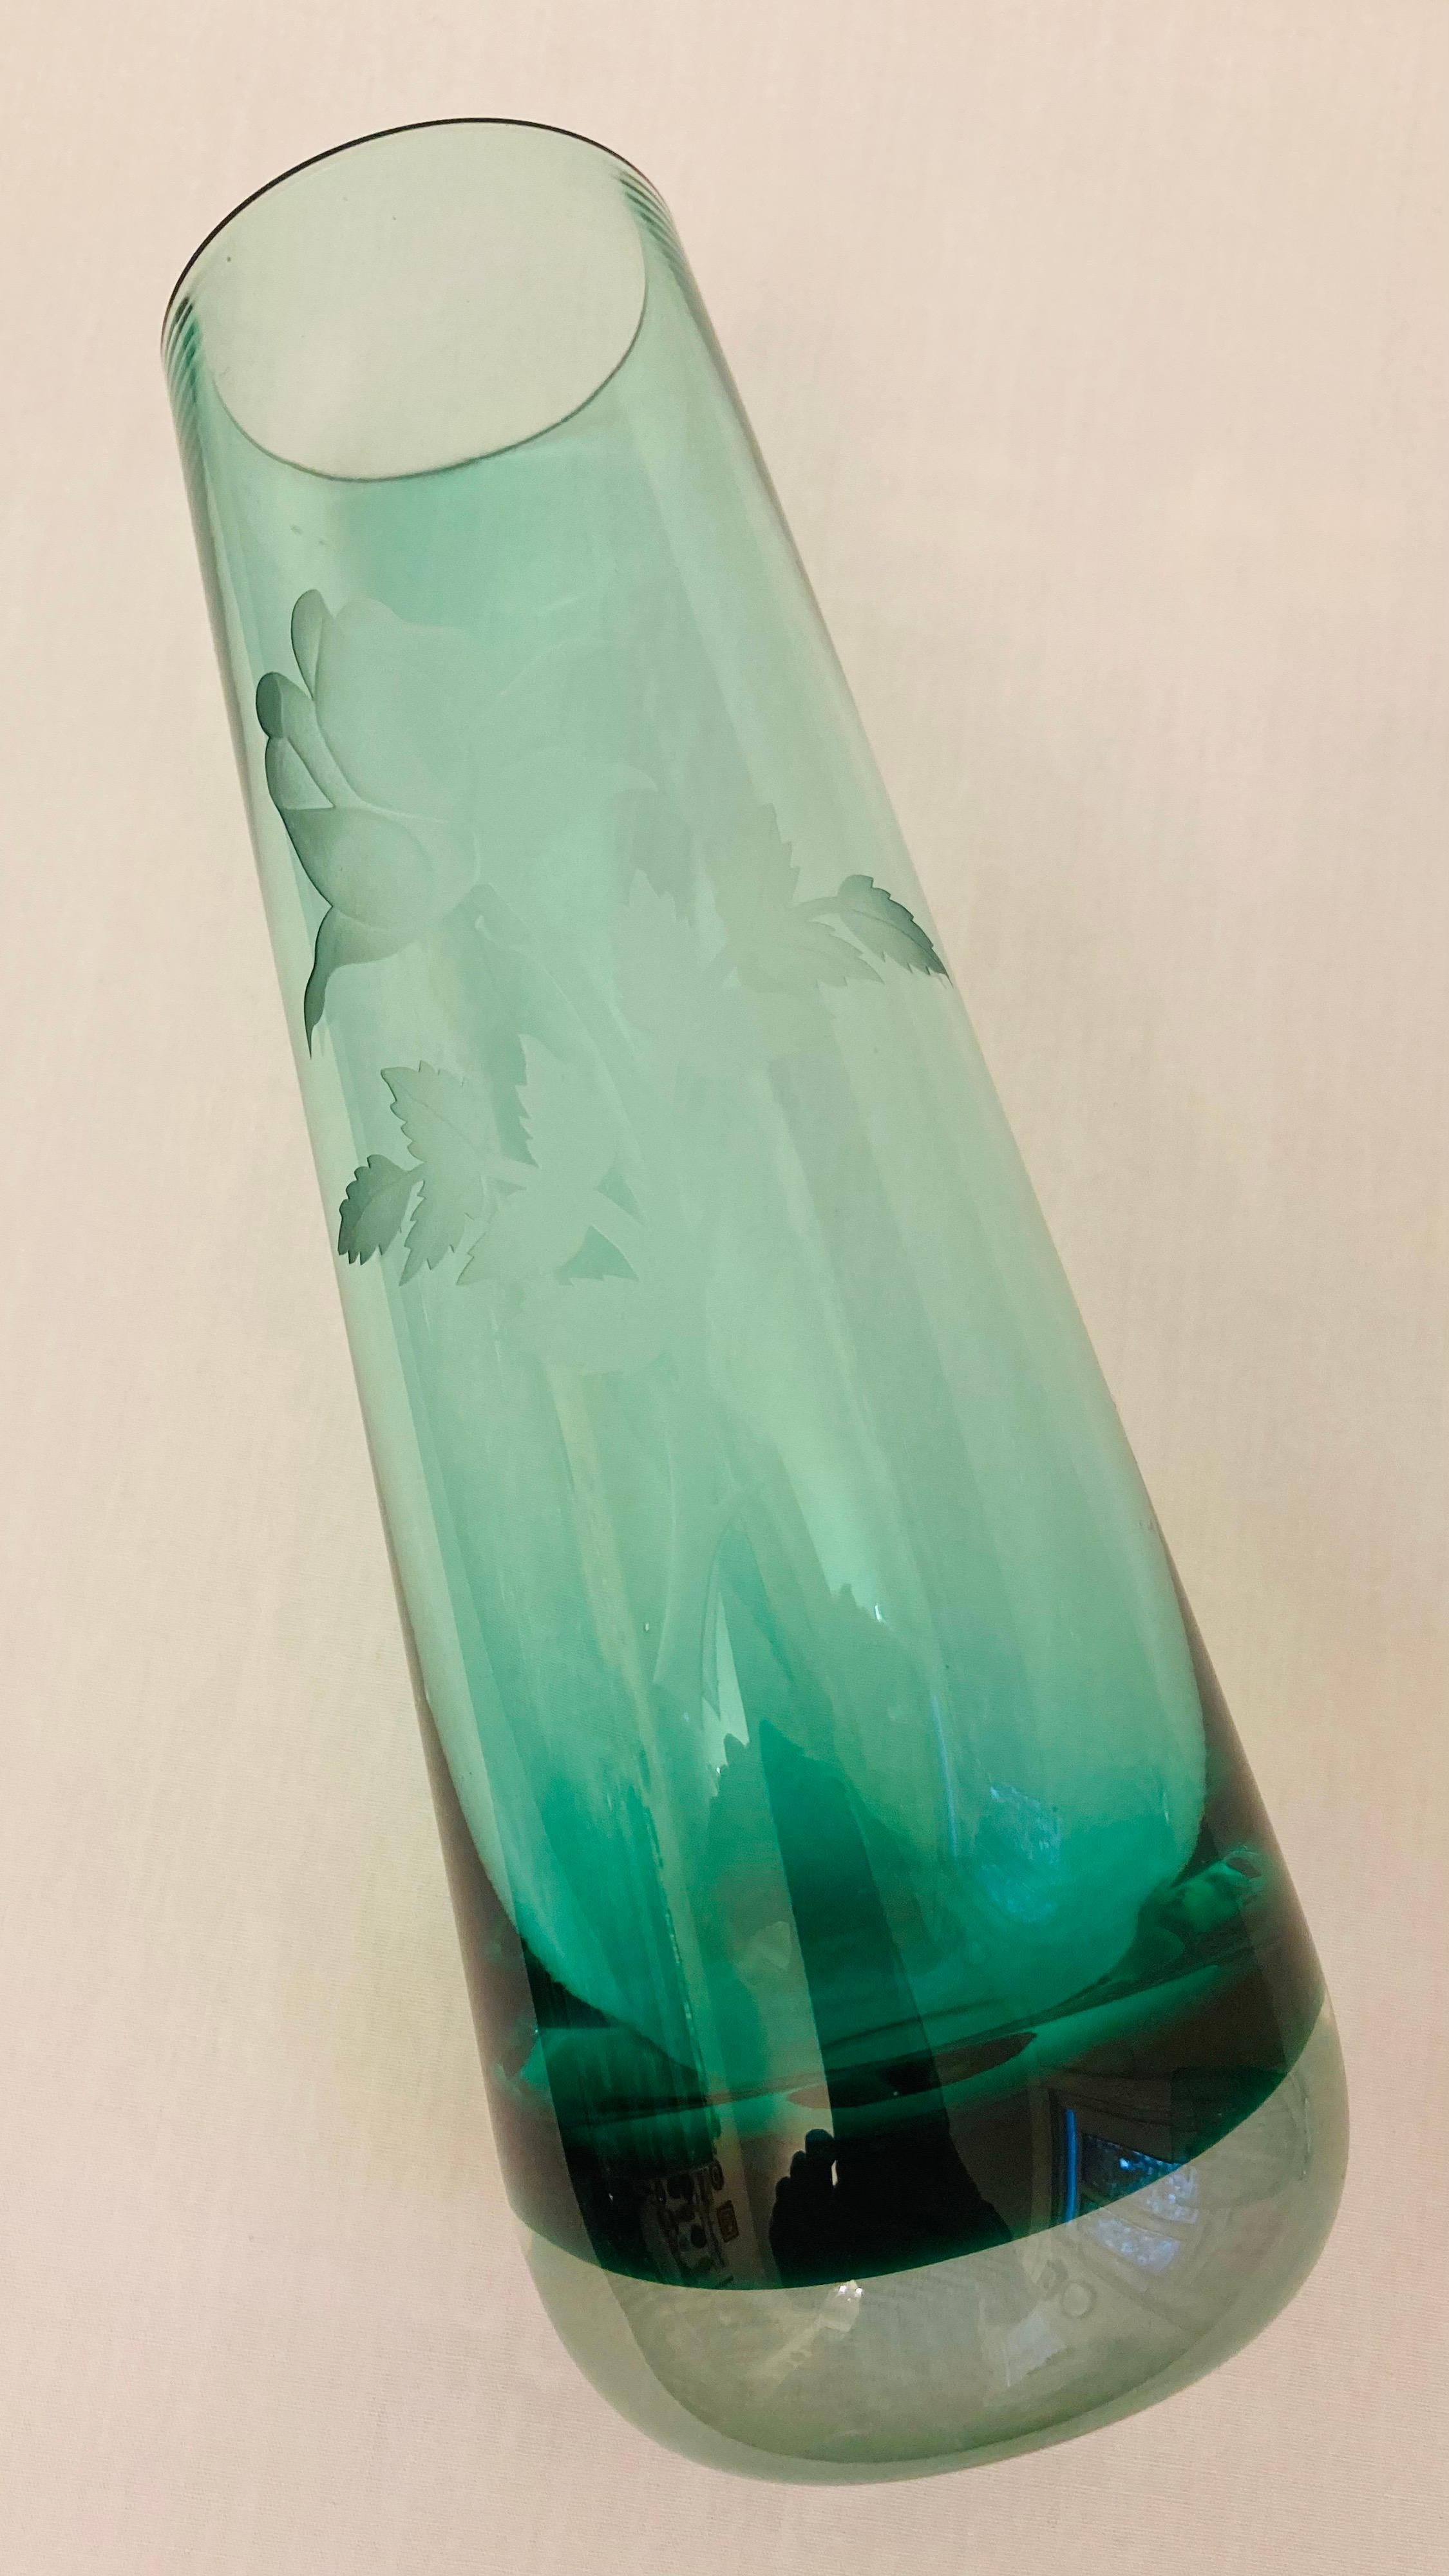 Other Vitange Caithness Glass Sommerso Engraved Bud Vases For Sale